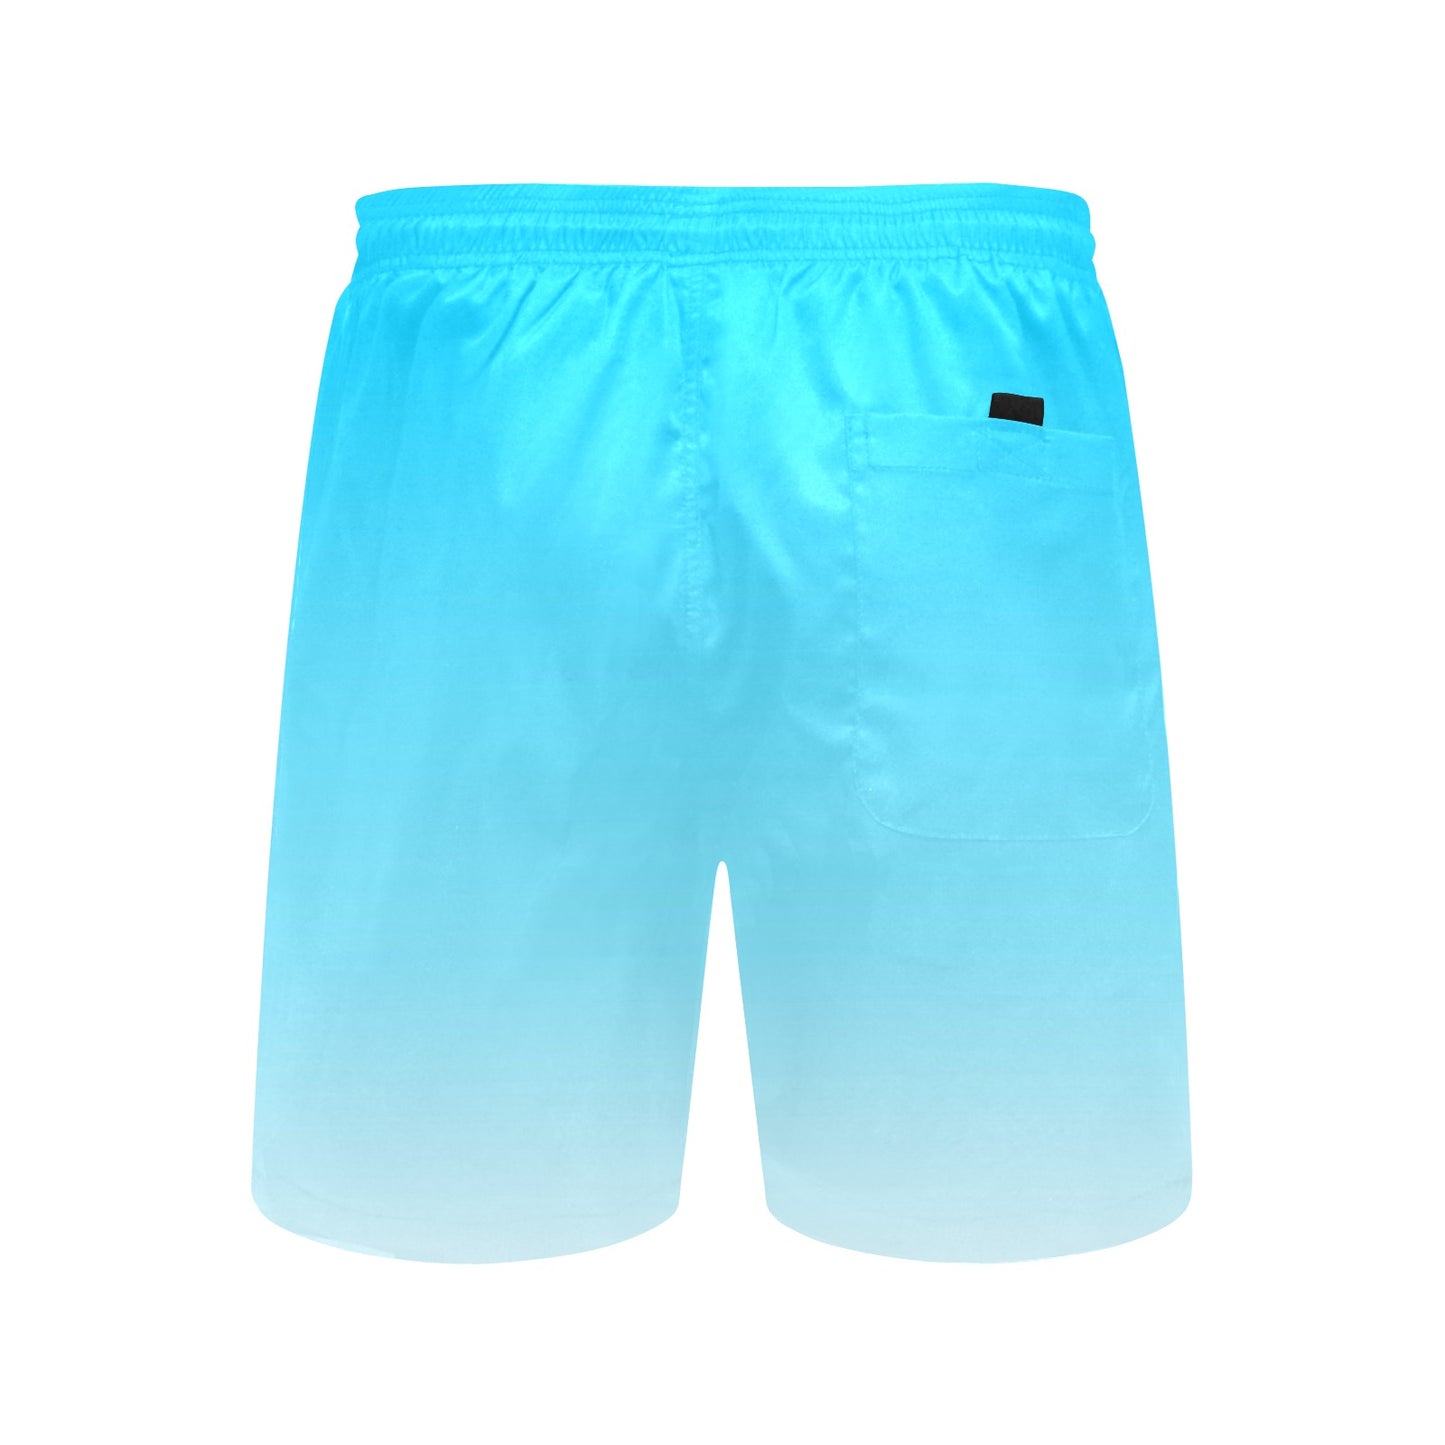 Blue Ombre Men Swim Trunks, Mid Length Shorts Aqua Beach Pockets Mesh Lining Drawstring Boys Casual Bathing Suit Plus Size Swimwear